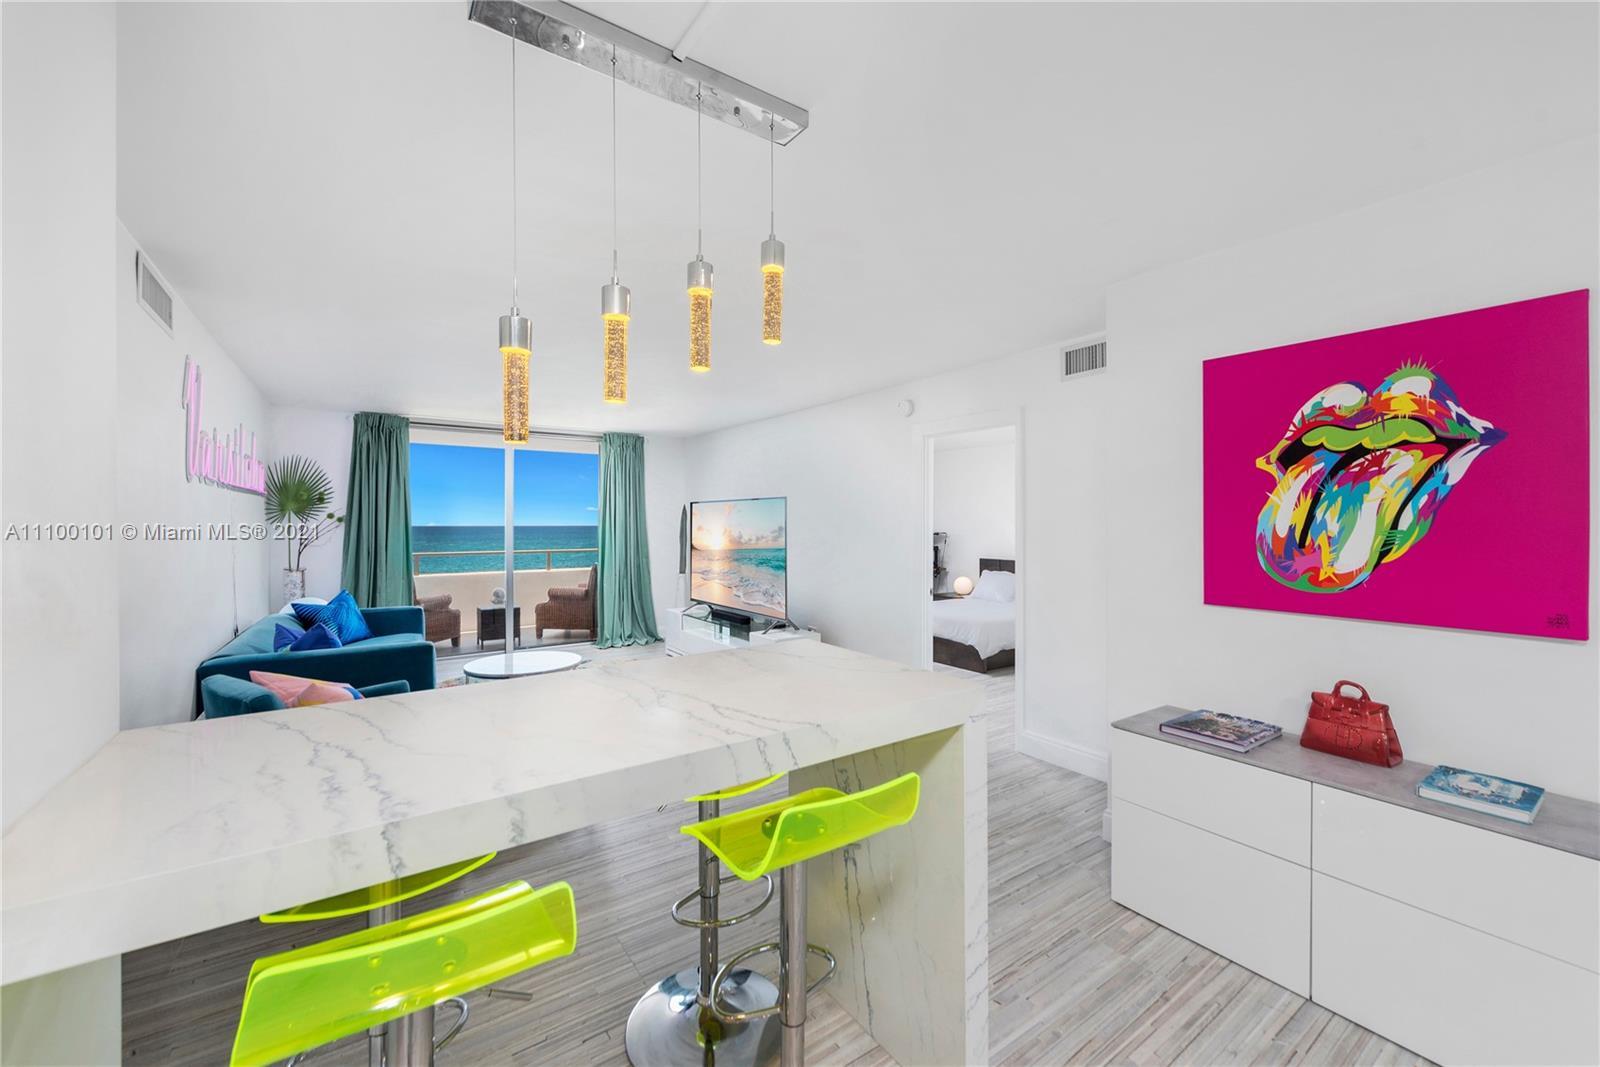 Iconic Morris Lapidus bldg on Millionaire’s Row in Miami Beach-Completely renovated 2/2 residence w/